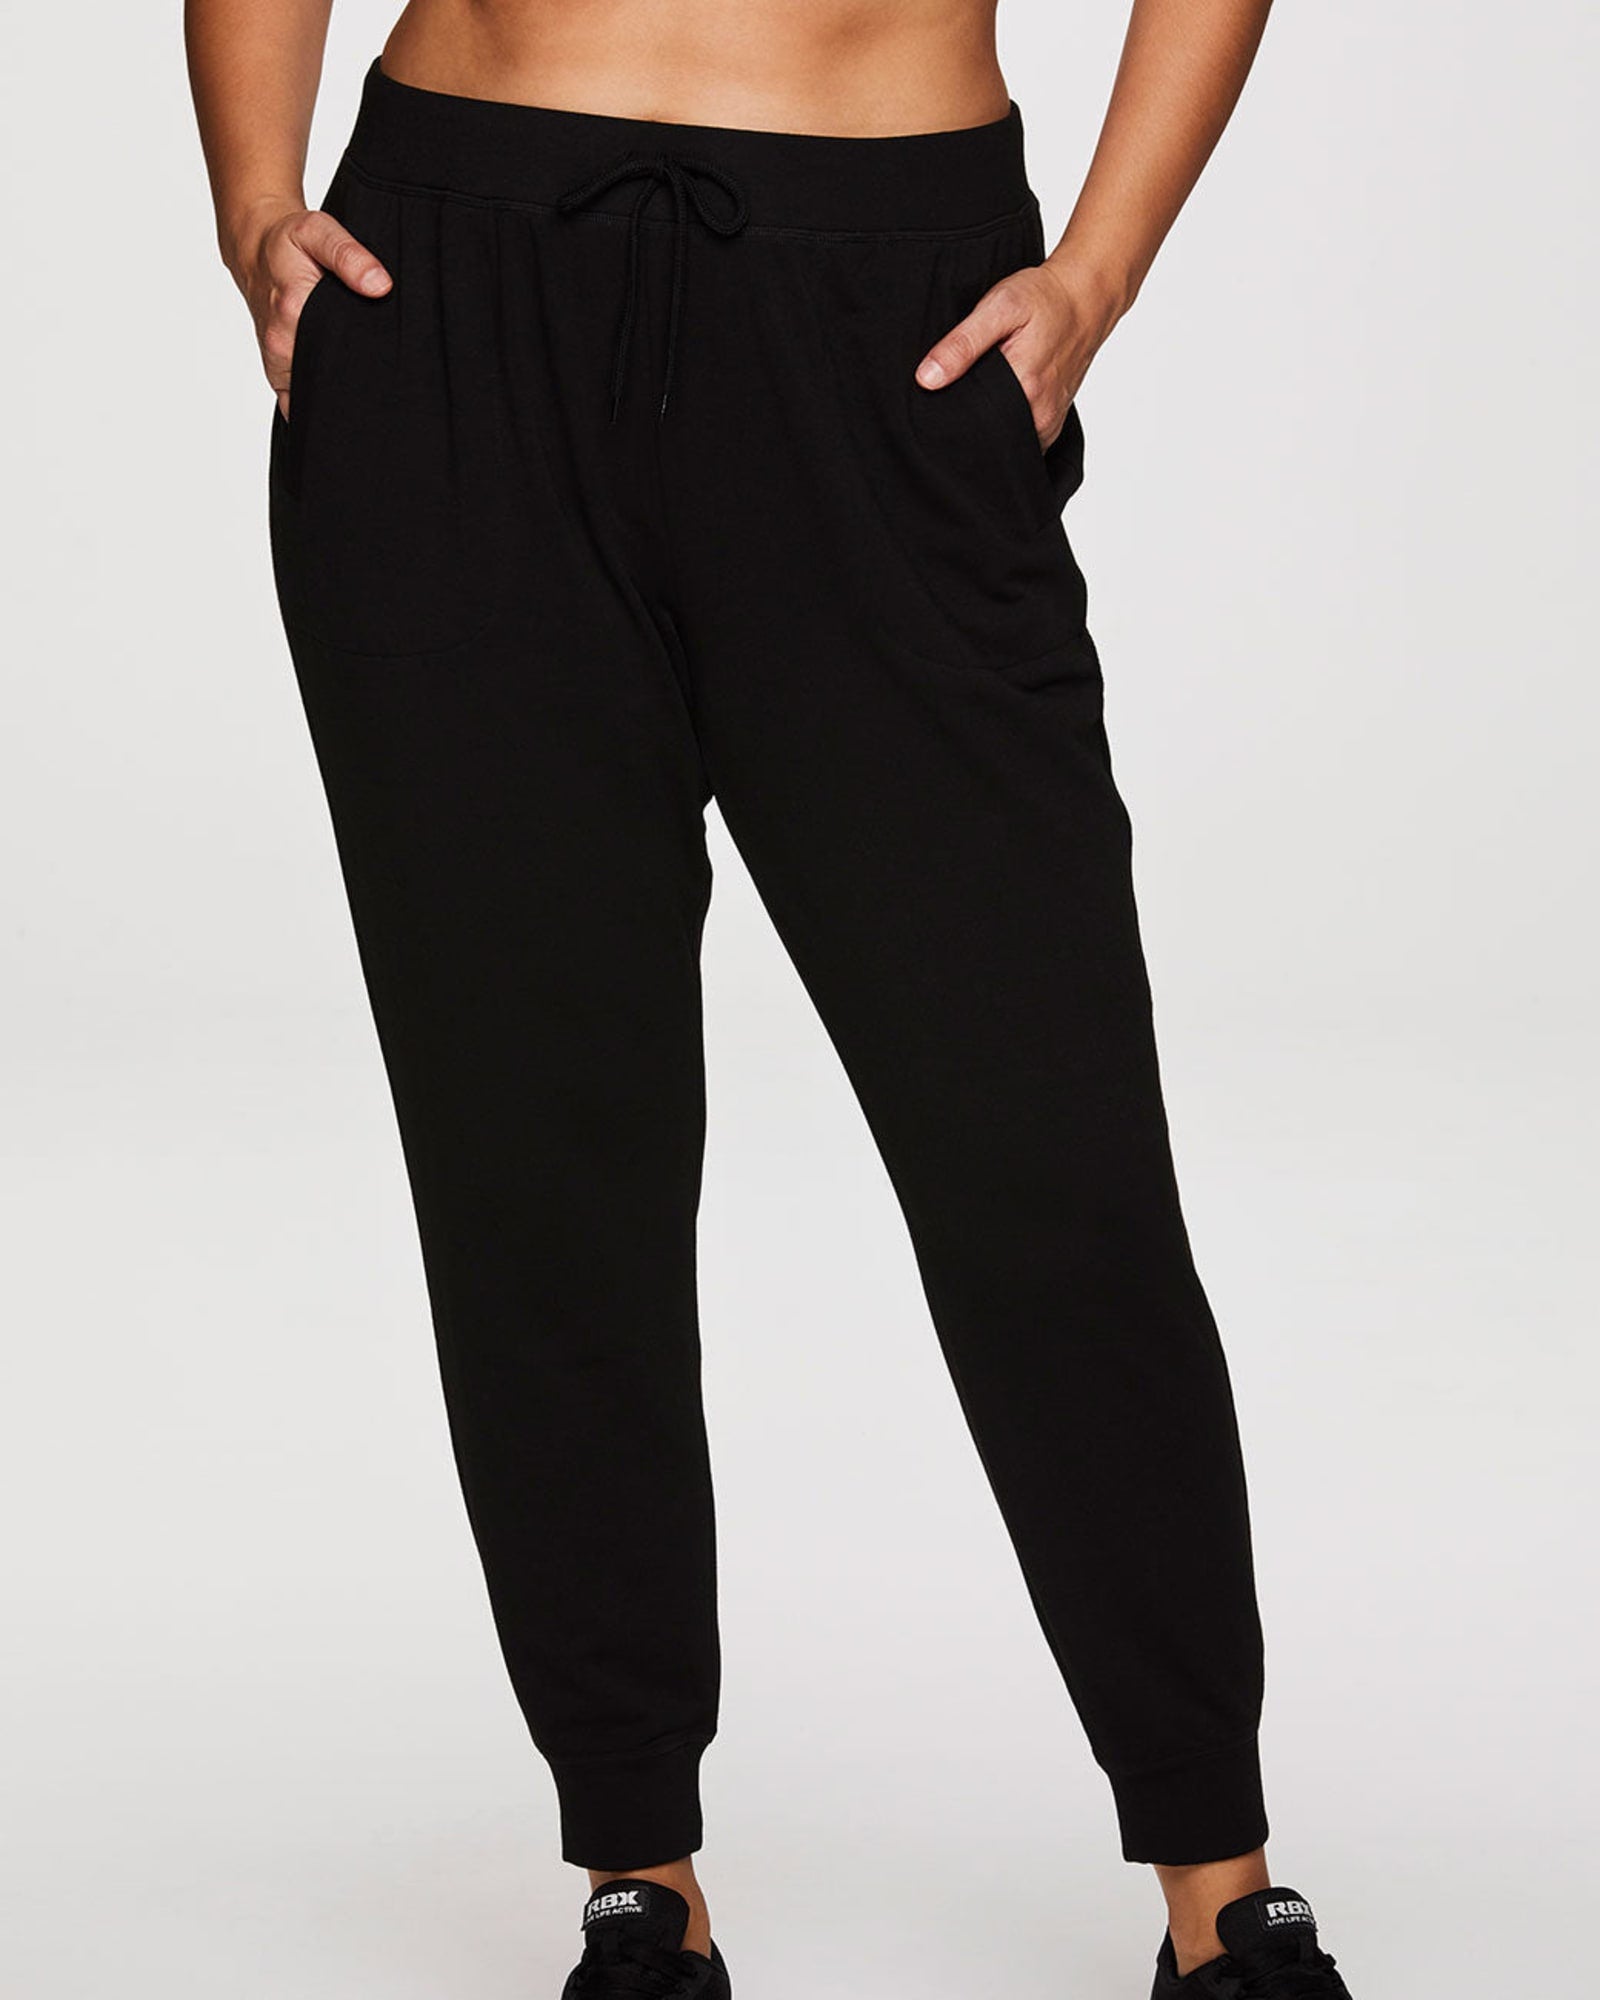 Poetic Justice Curvy Women's Lex Black Jogger Pants W Pockets